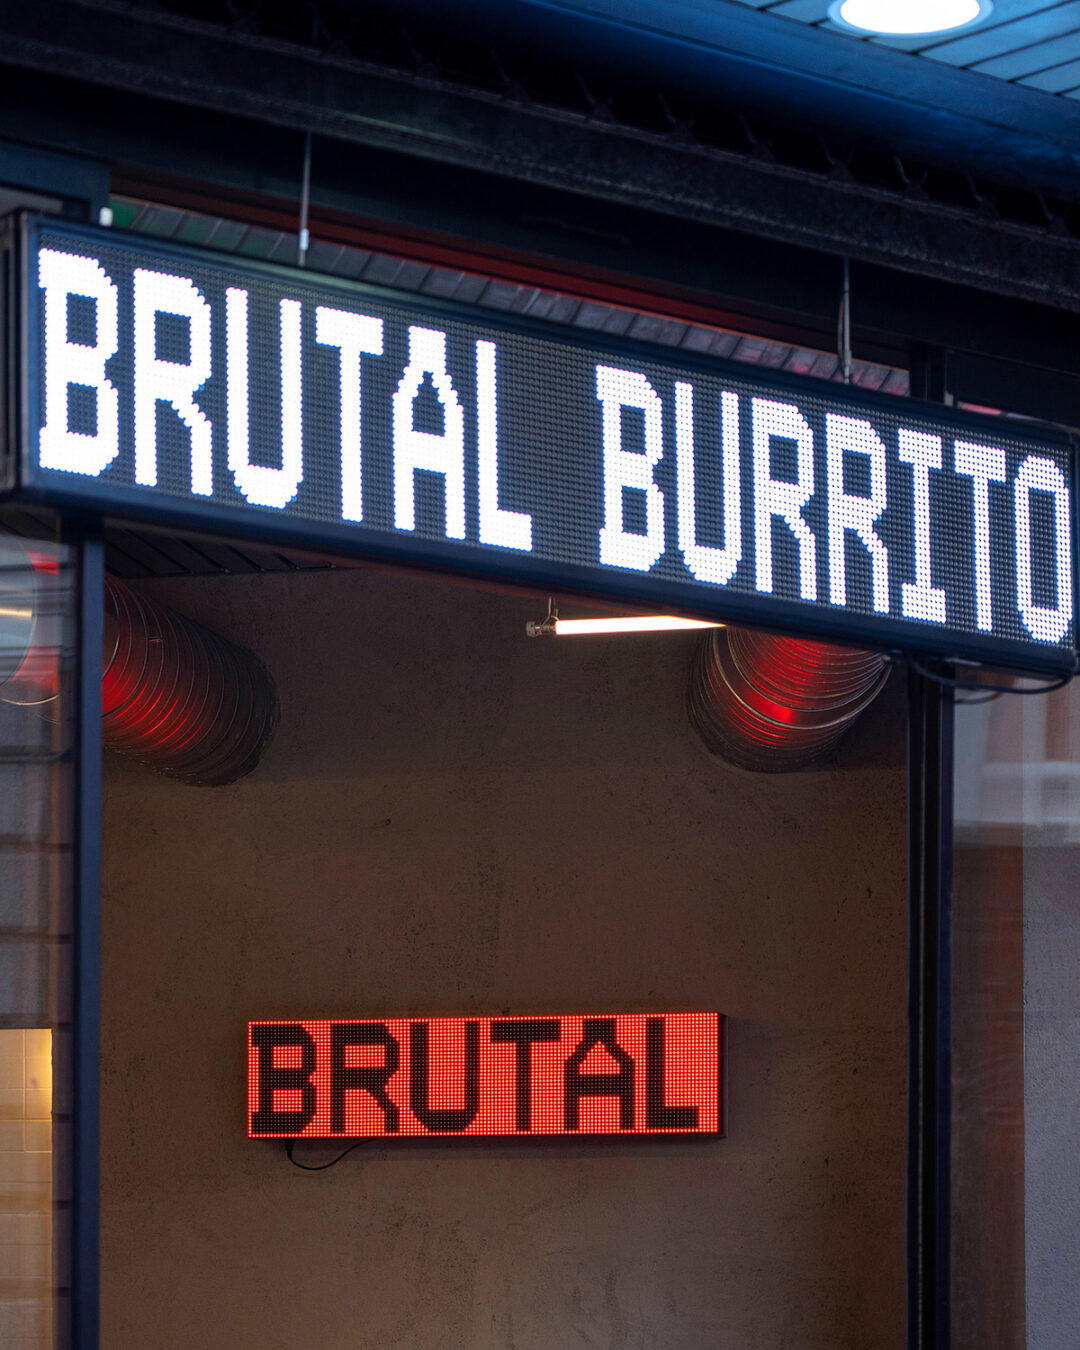 Tres Tipos Gráficos Brutal Burrito